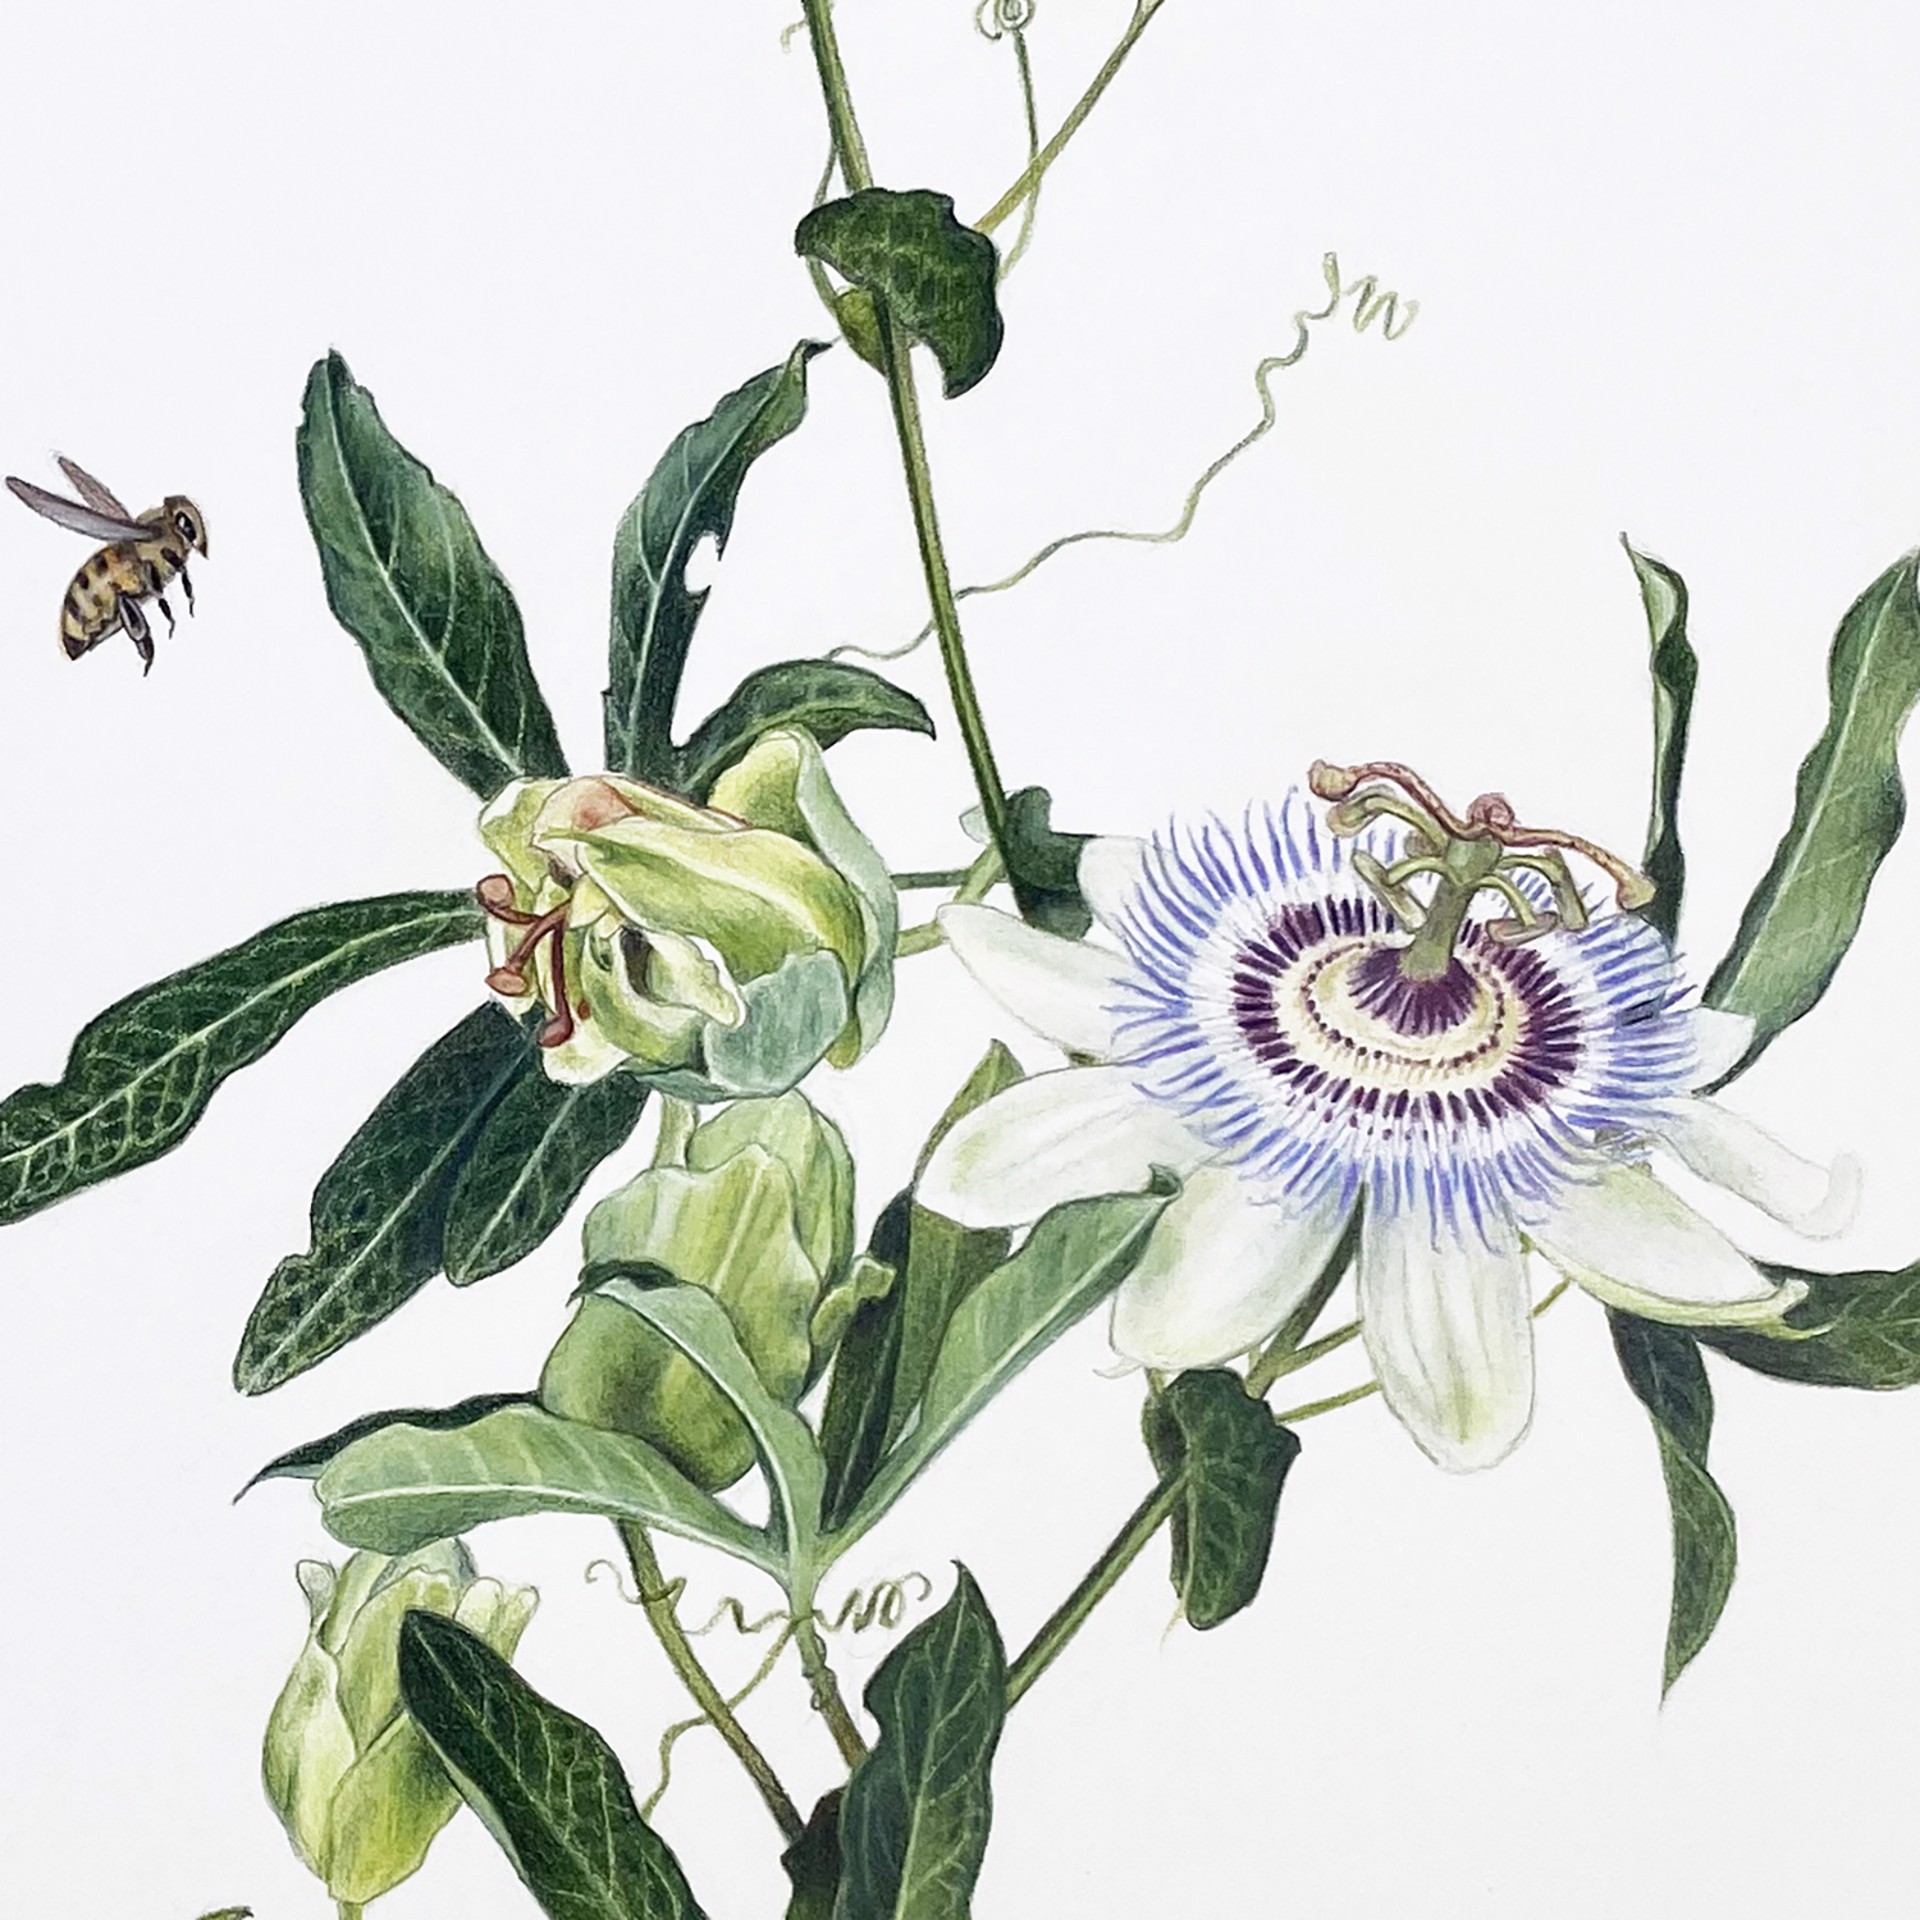 Passiflora Vine with Luna Moth, Black Swallowtail & Honeybee by Hannah Hanlon